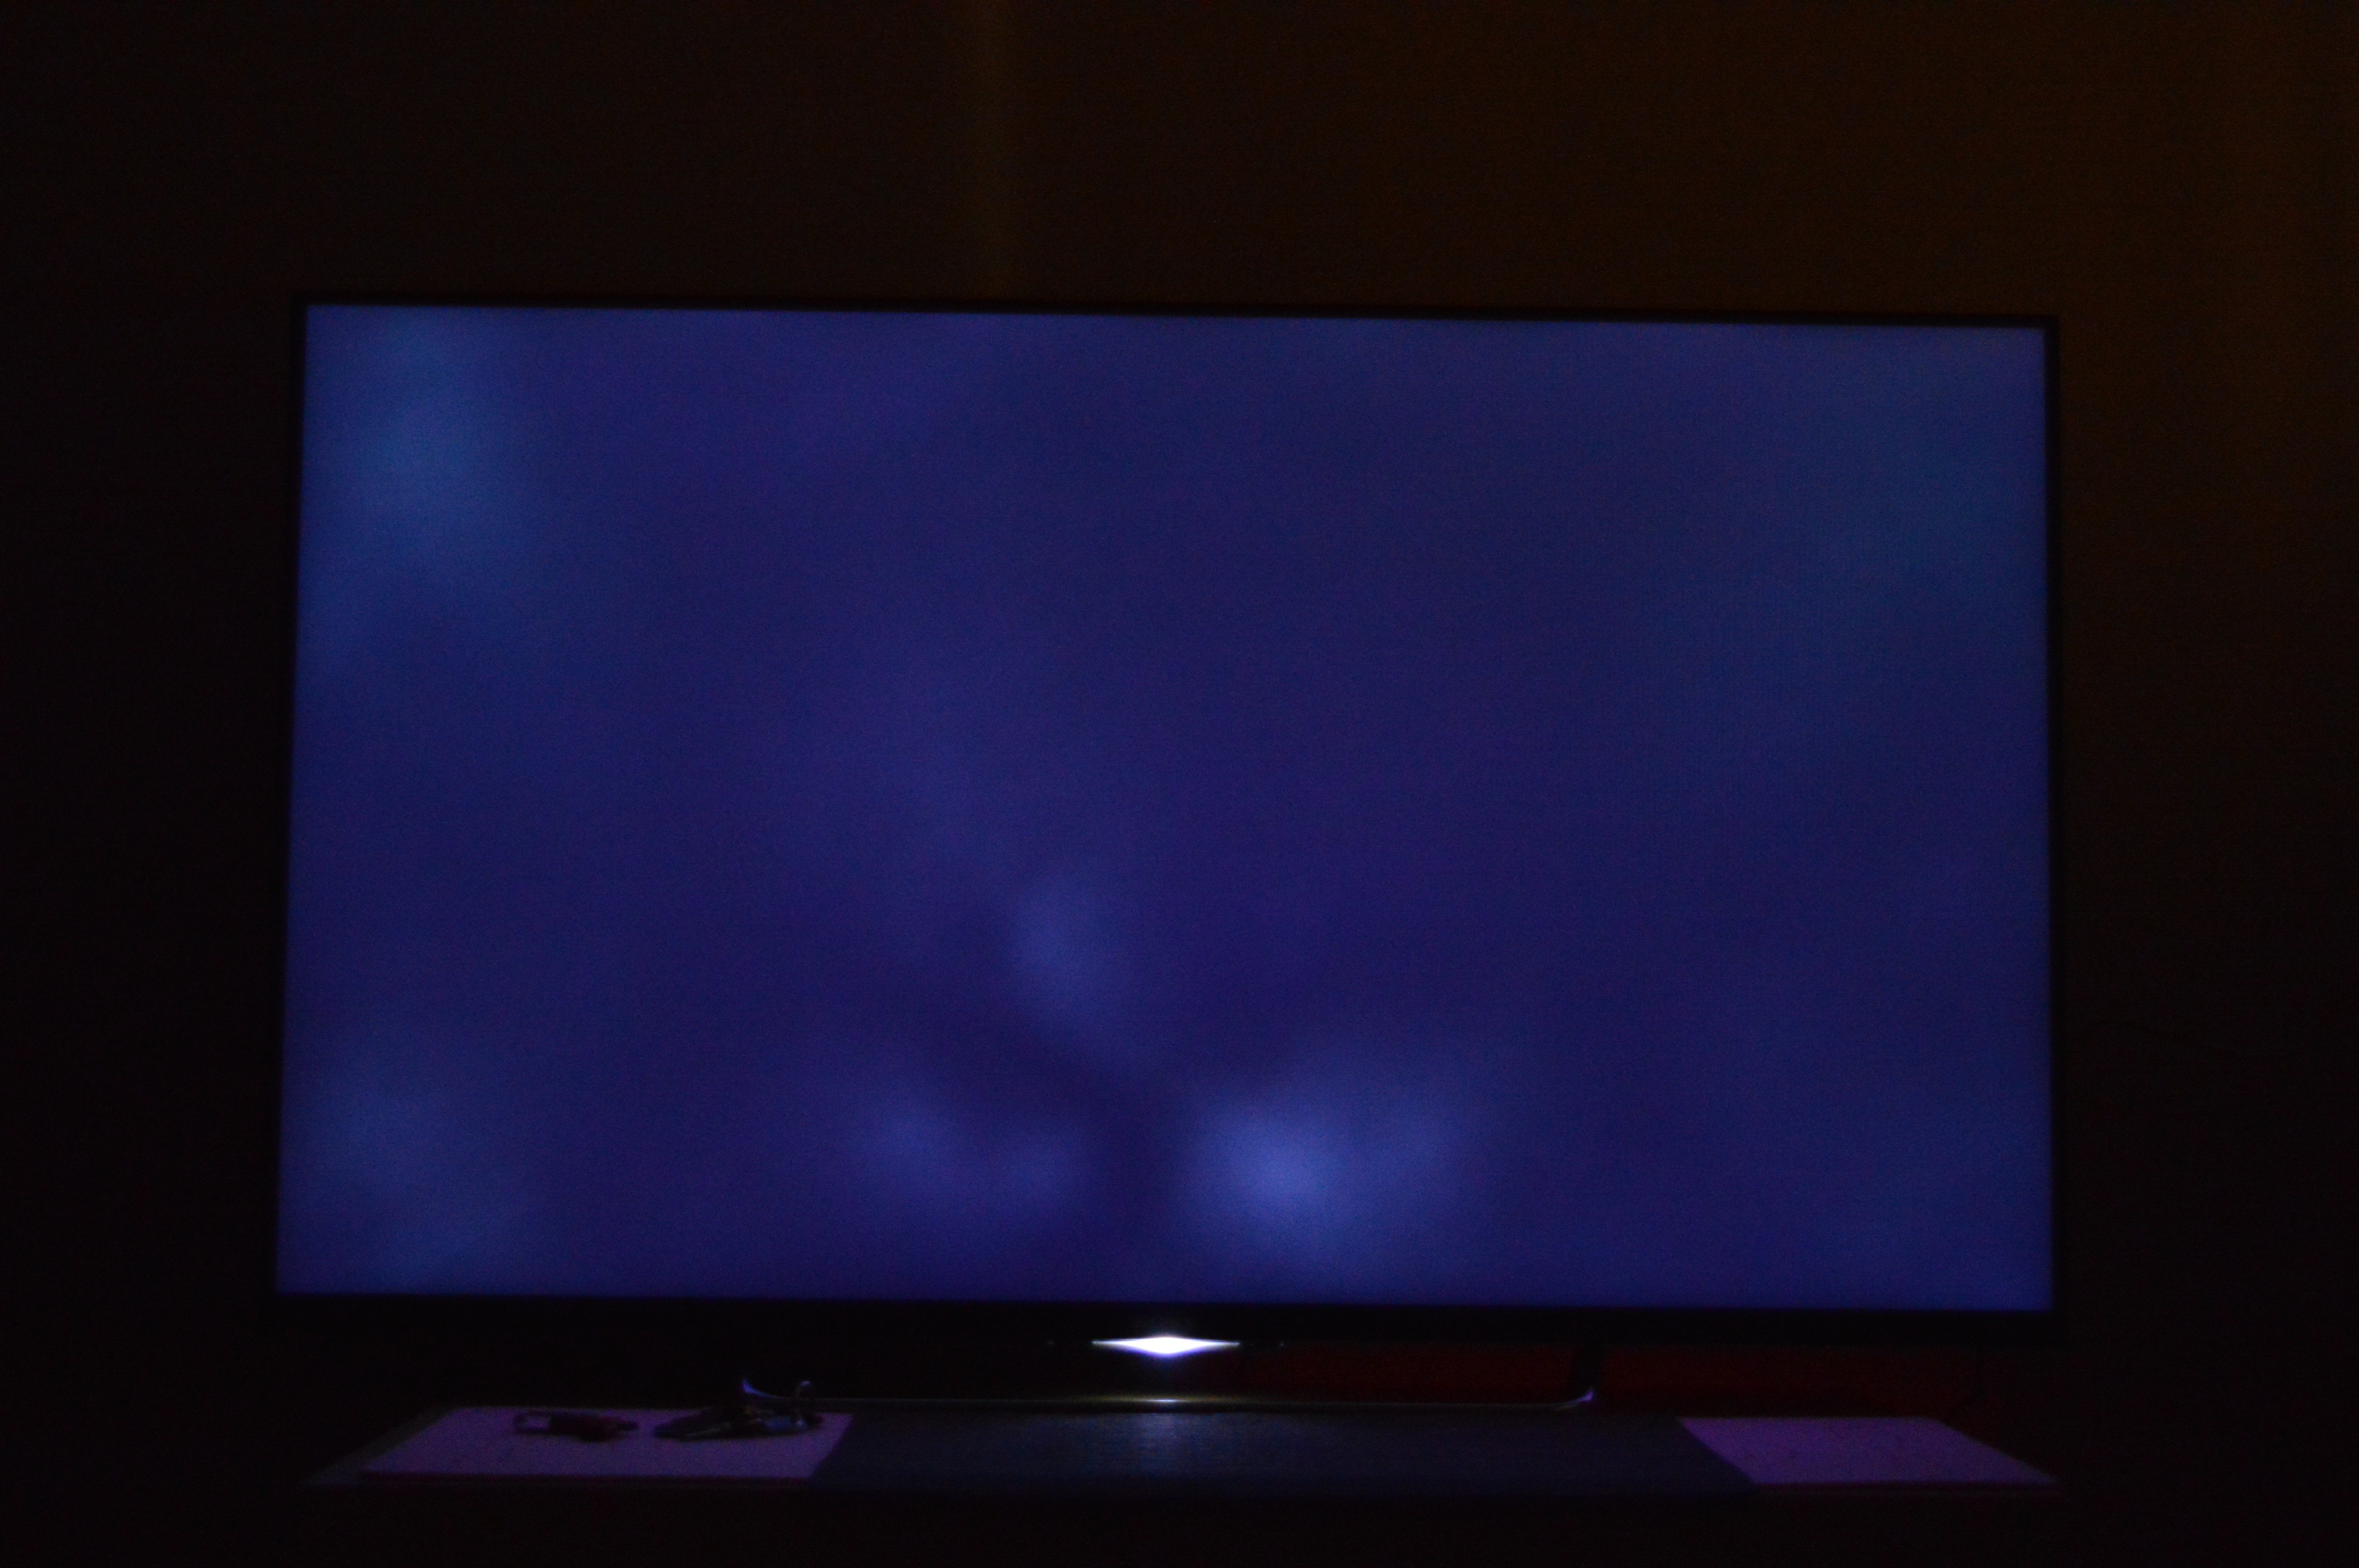 Световое пятно на экране. Телевизор Samsung засветка экрана. Лед подсветка телек LG пятнами. Пятна на экране монитора. Световое пятно на экране телевизора.